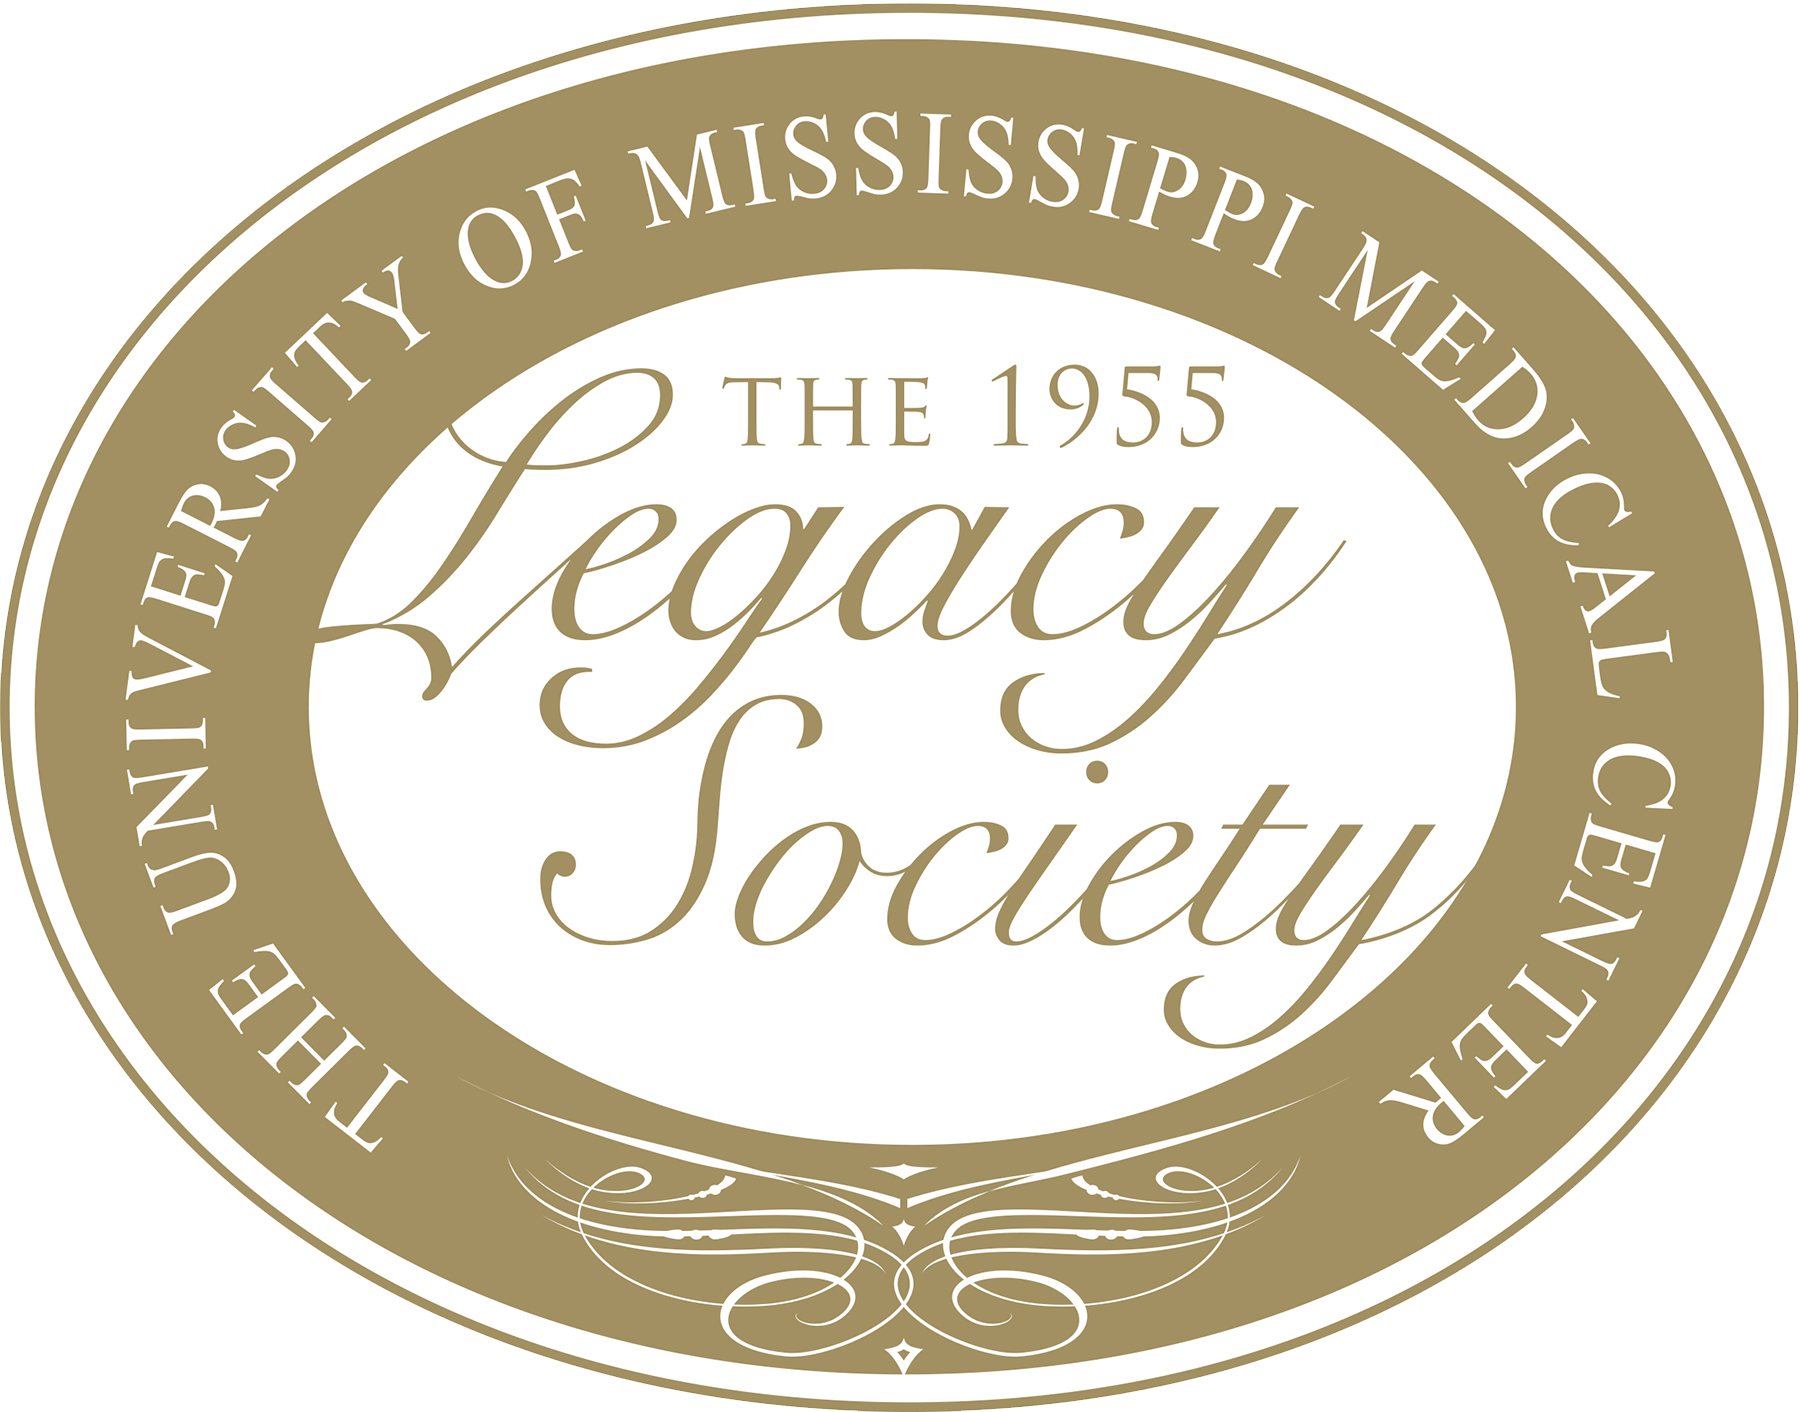 University of Mississippi Medical Center The 1955 Legacy Society logo